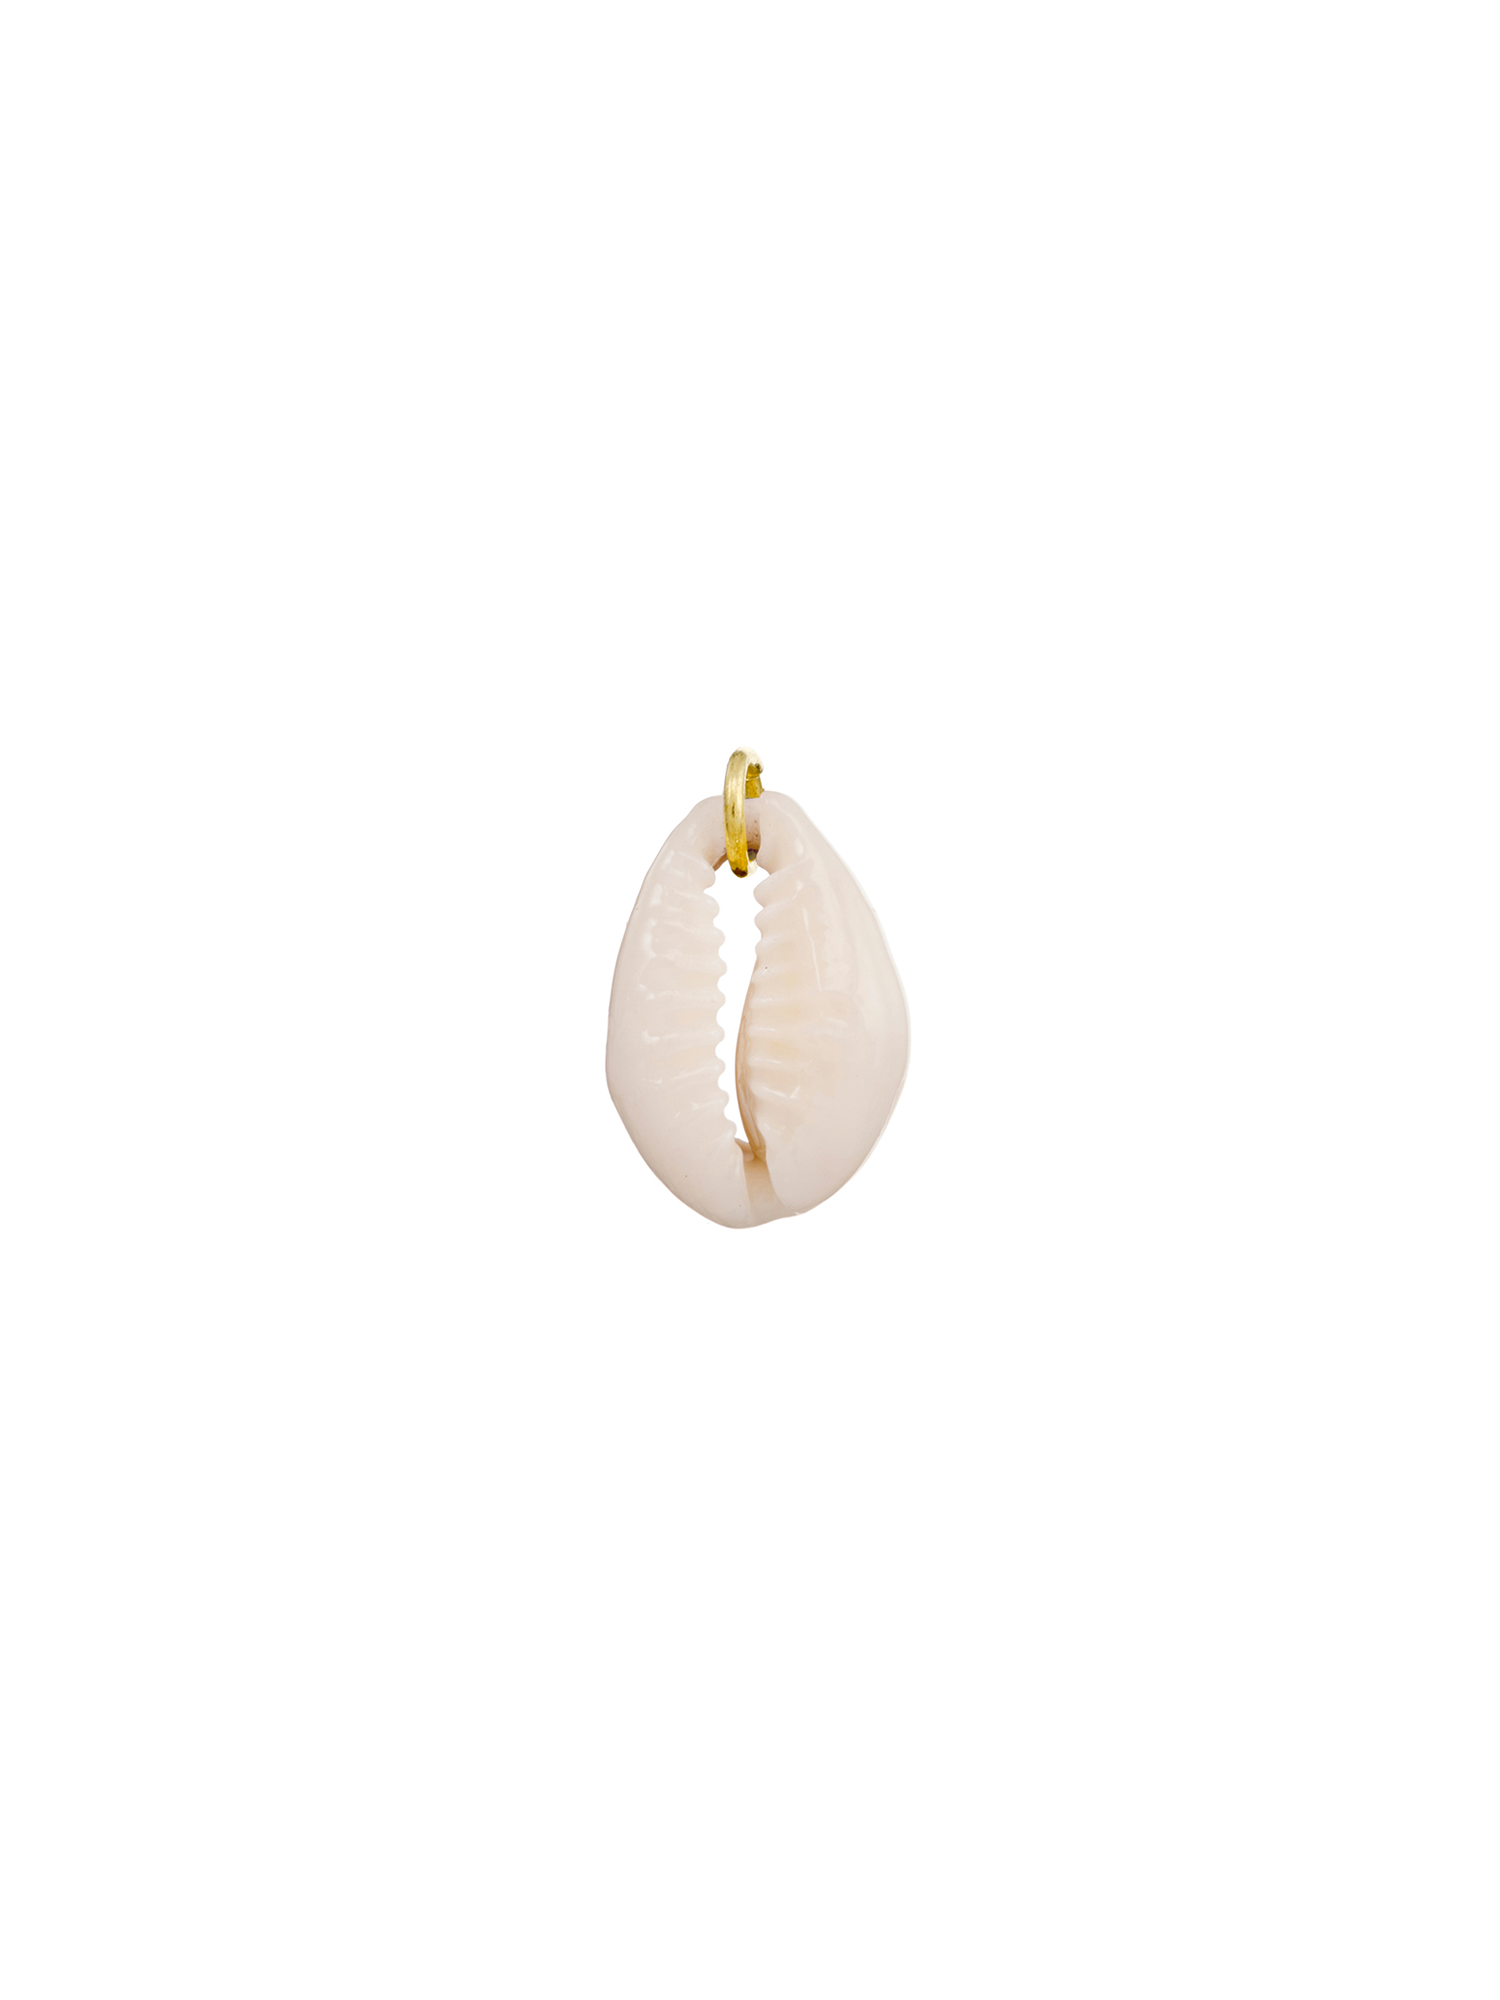 cowrie shell earring charm